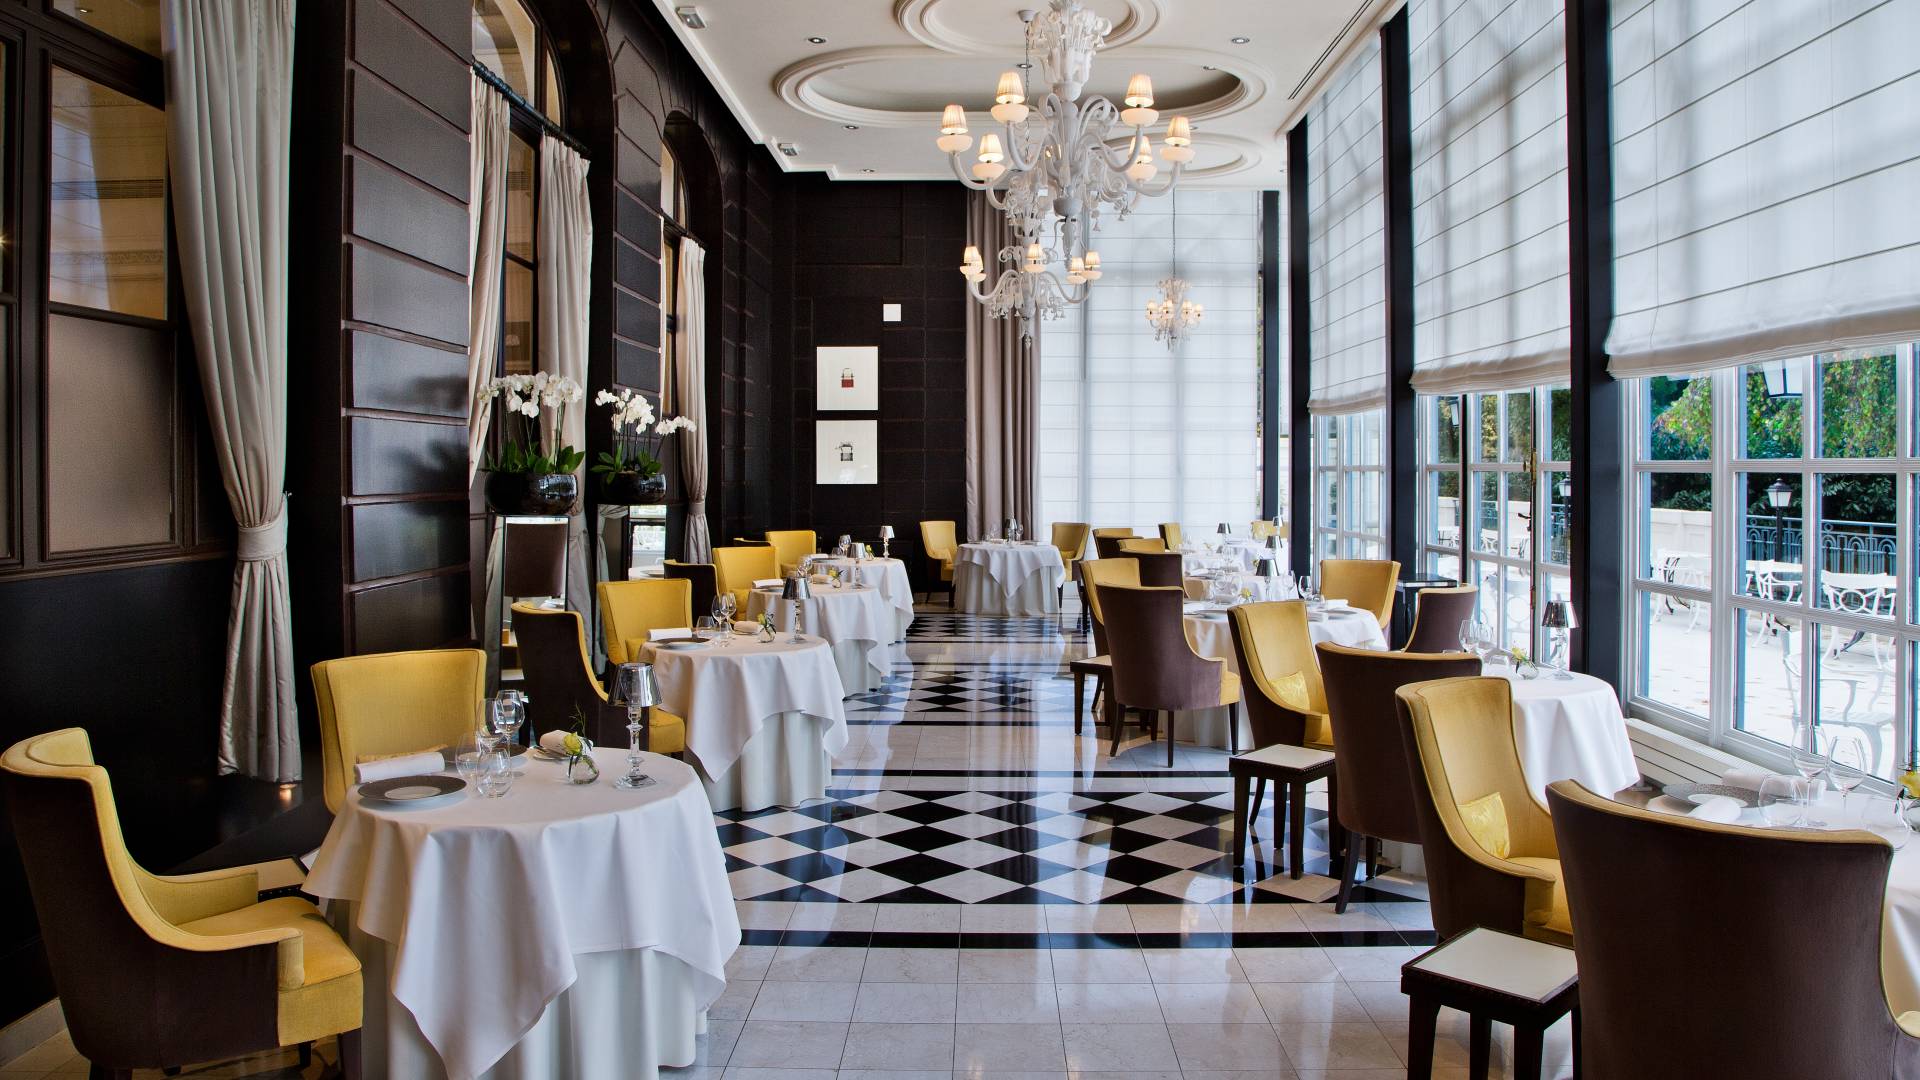 Gordon Ramsay au Trianon Restaurant Dining Area with Large Windows